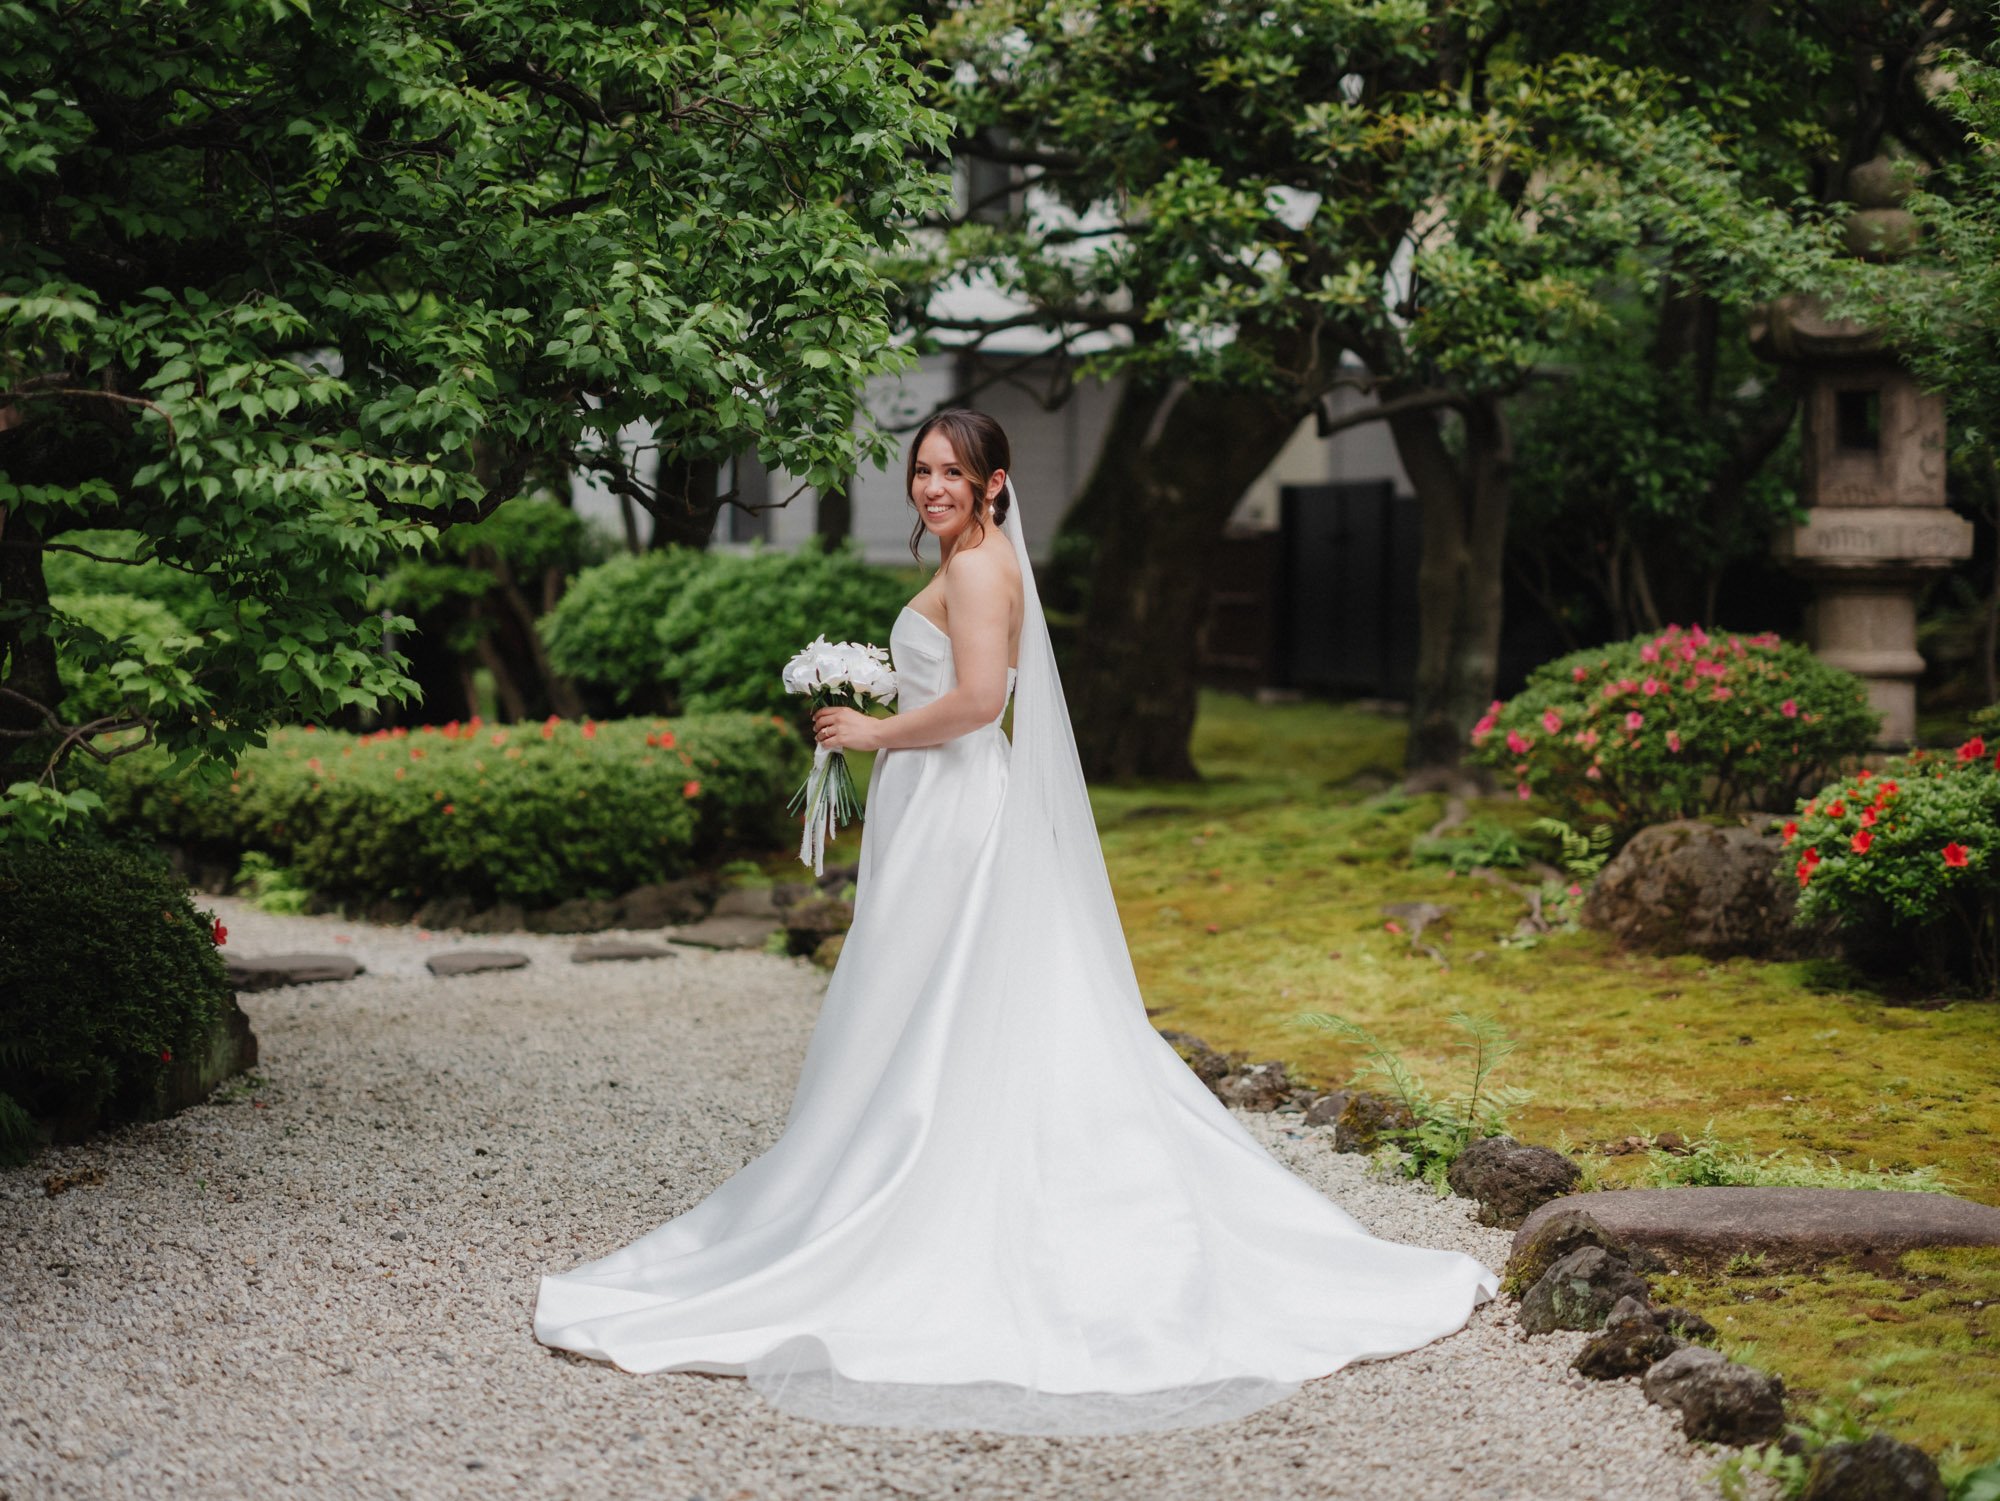 Tokyo elopement and wedding photographer